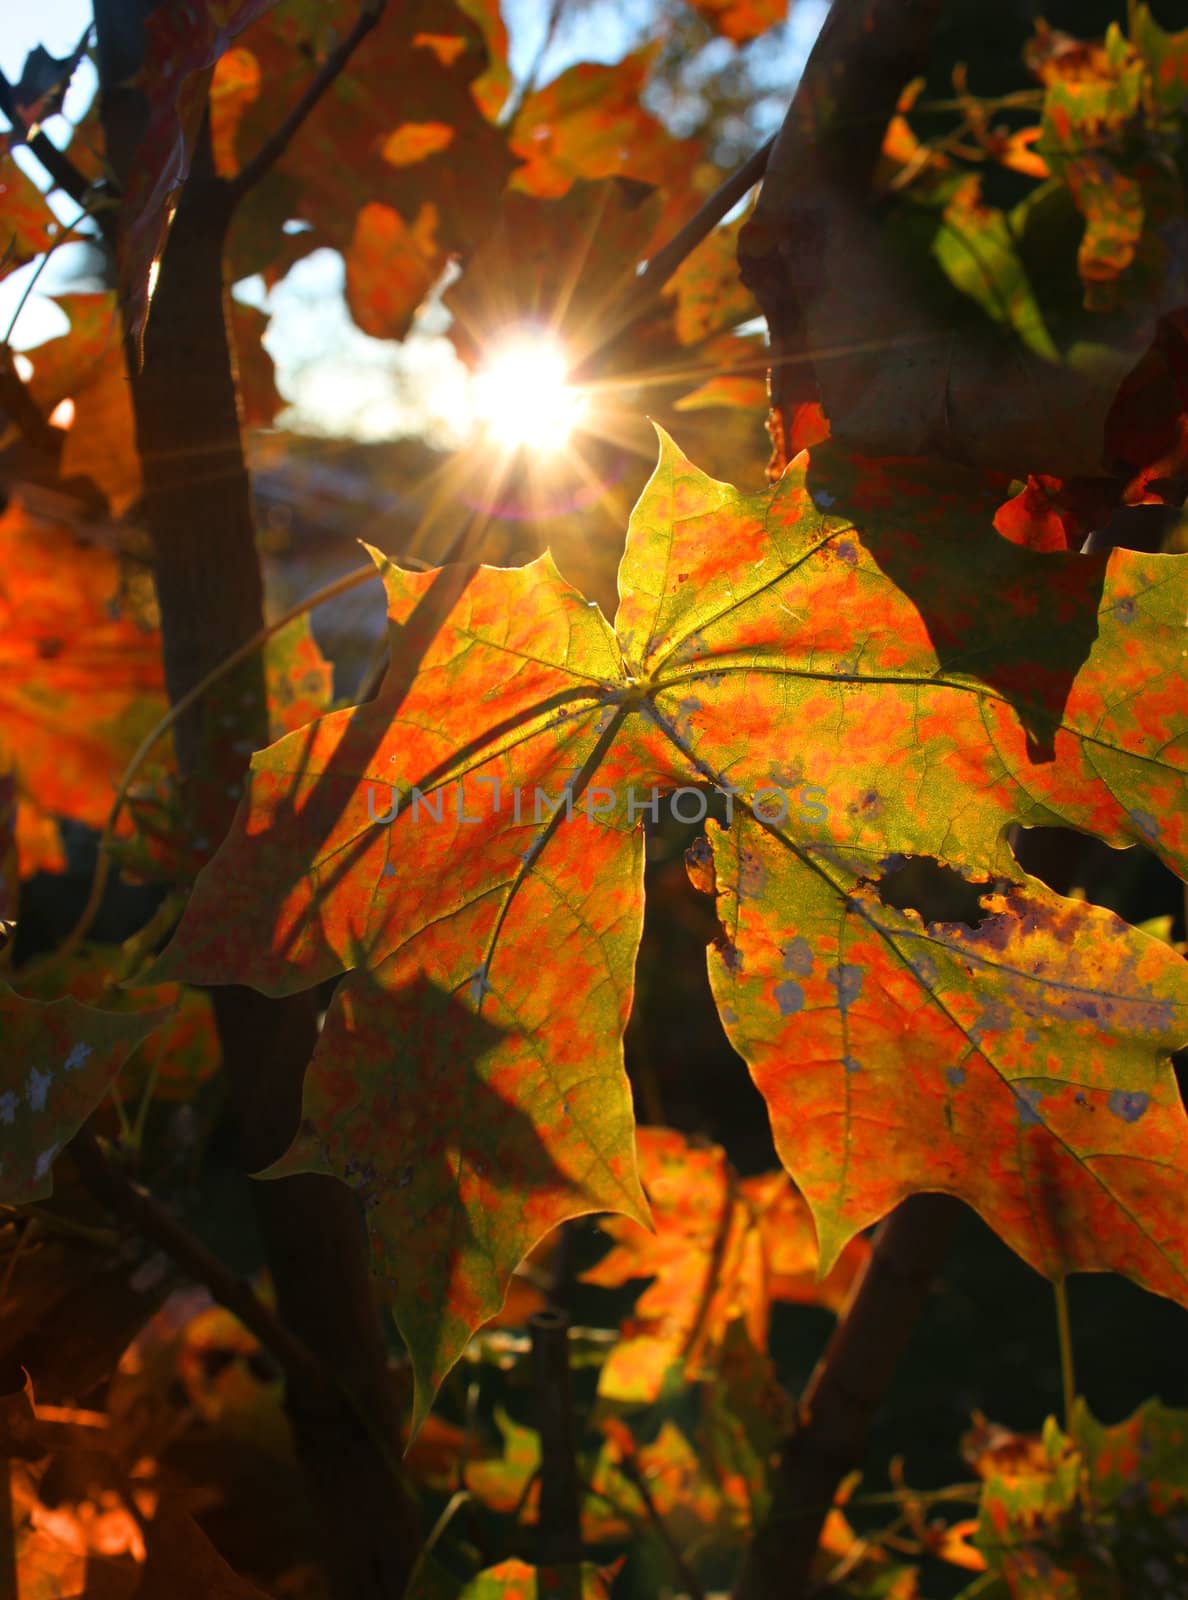 sunlight through maple leafs in colorful autumn garden 